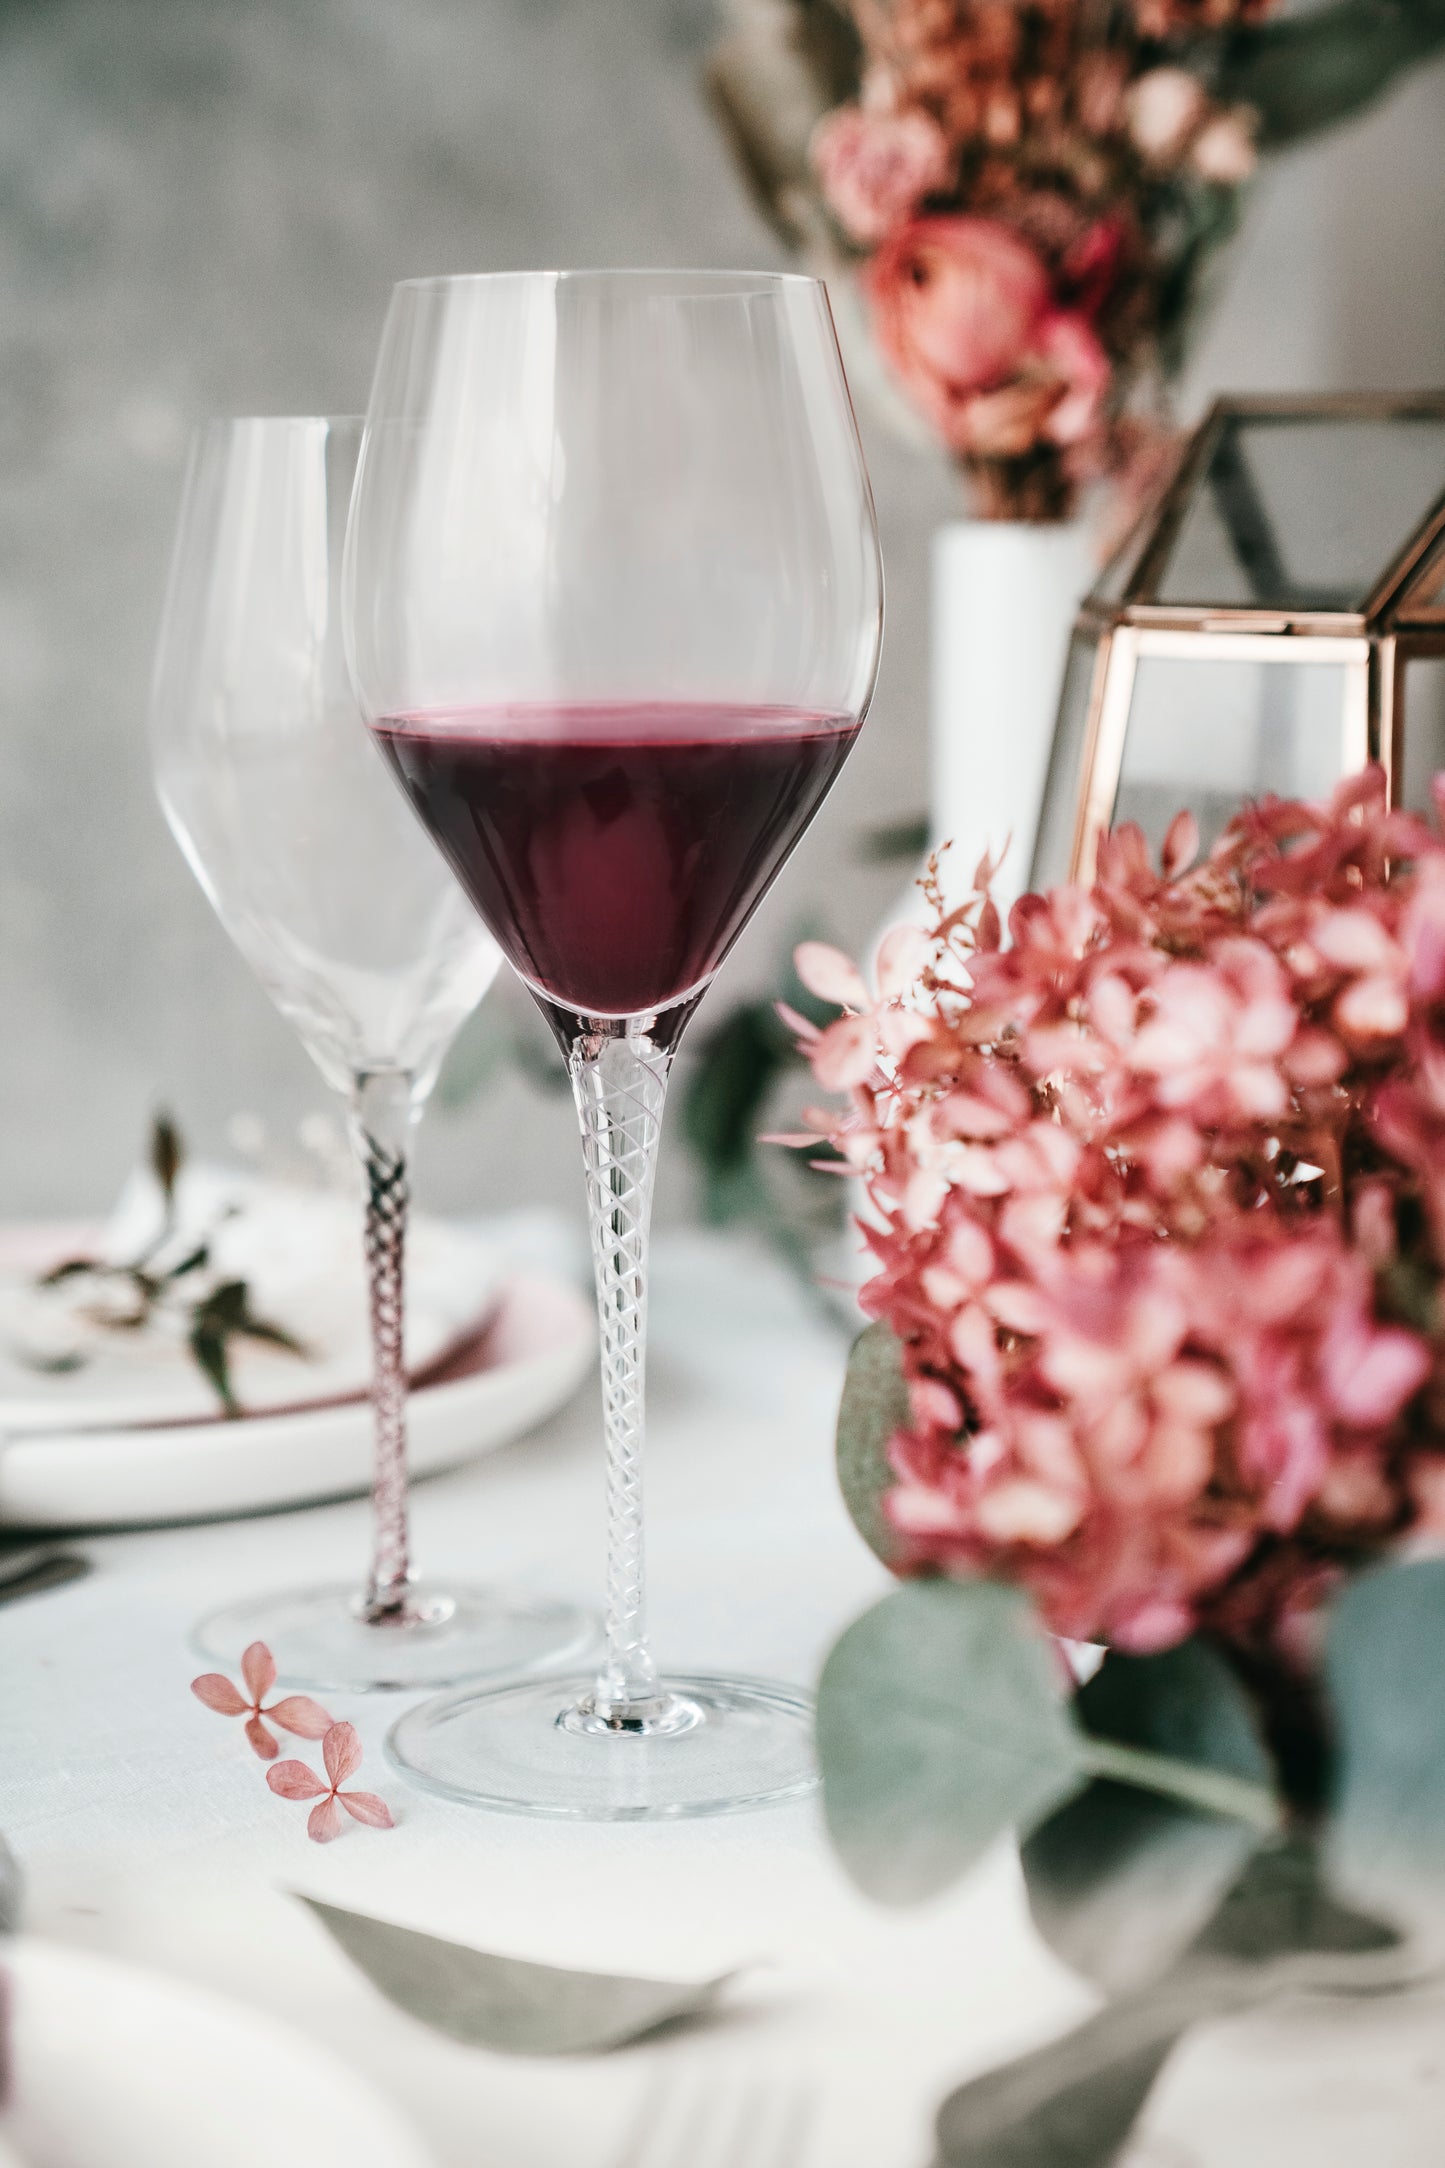 Spirit Bordeaux Red Wine Glass